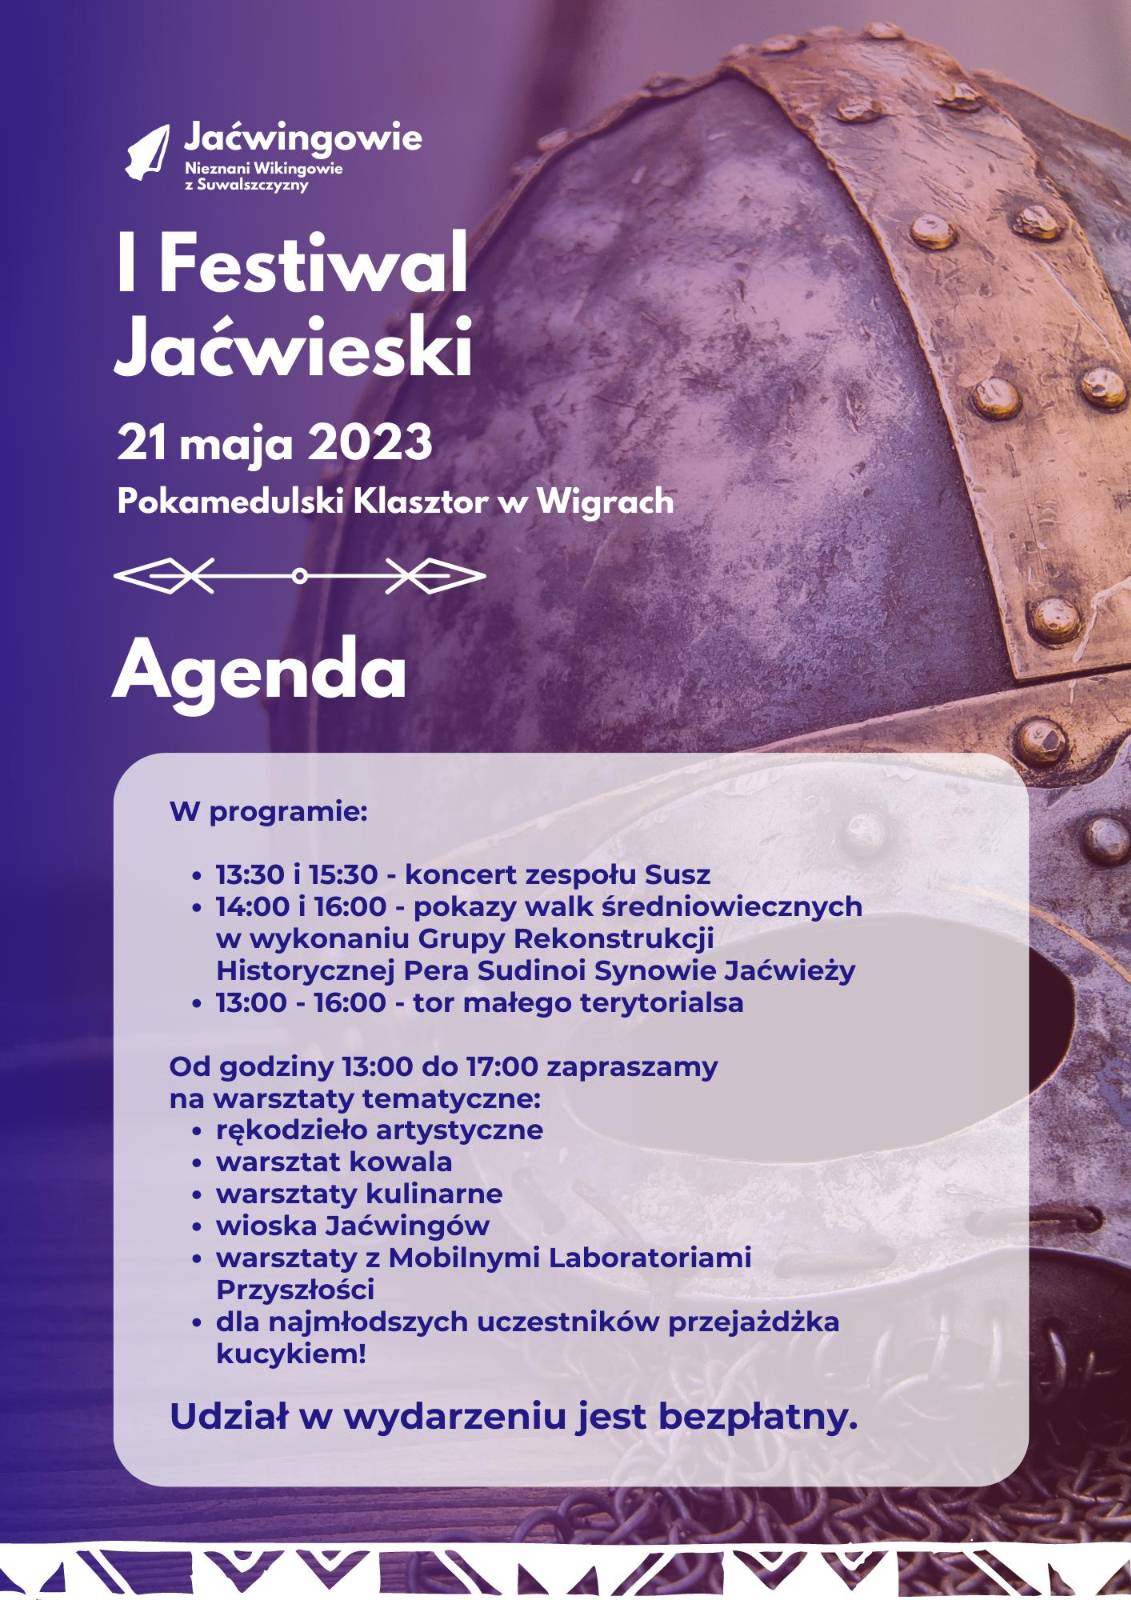 I Festiwal Jaćwieski - agenda